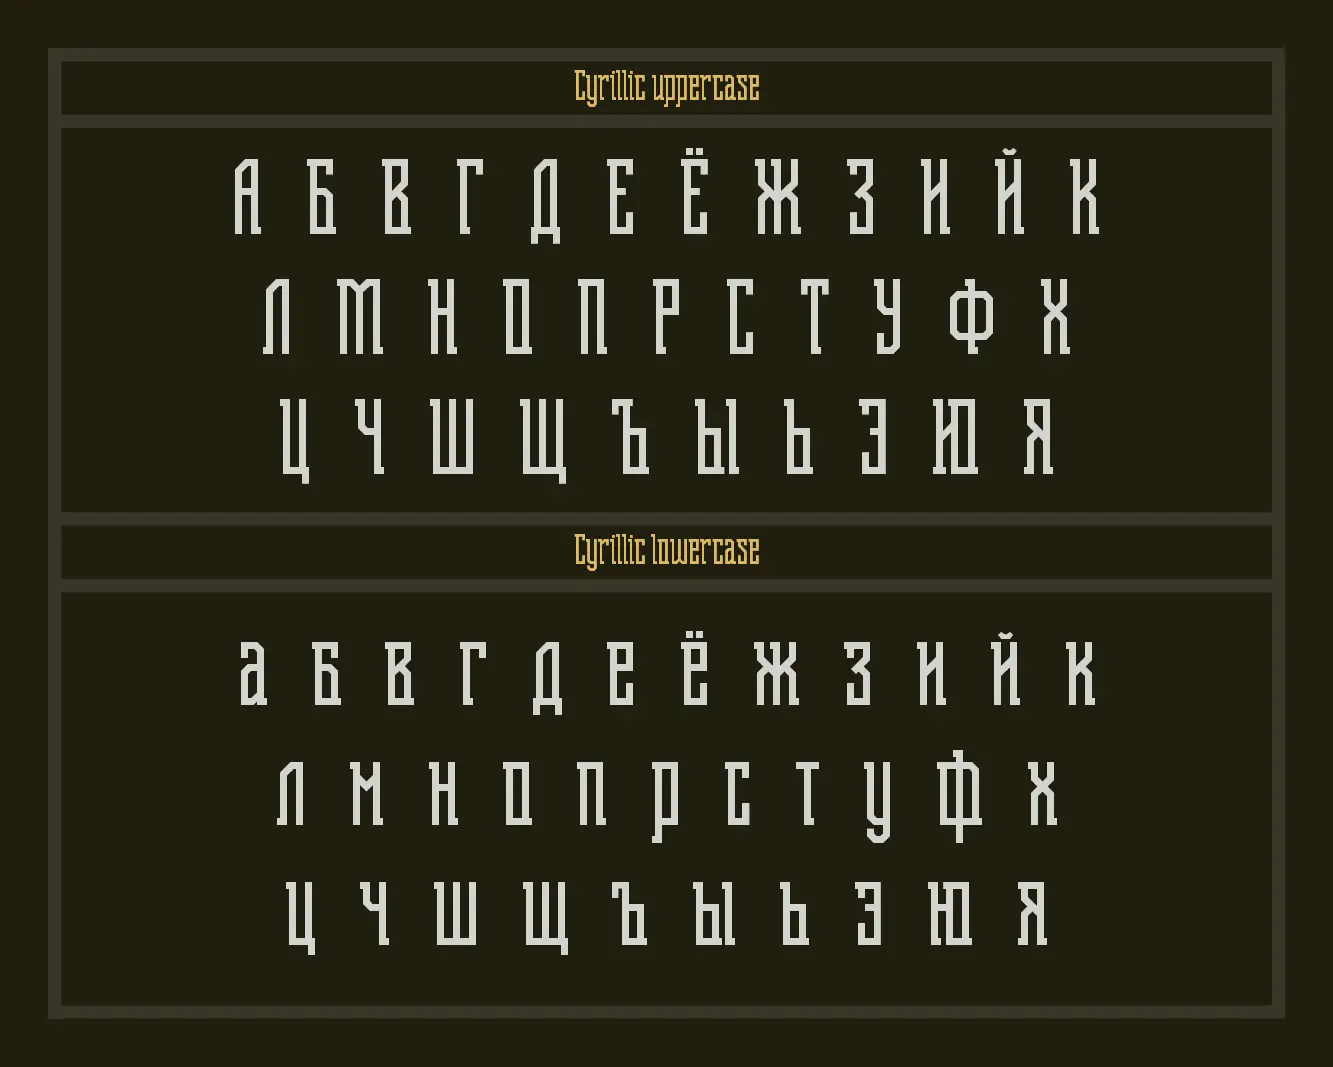 Шрифт Shihan Cyrillic